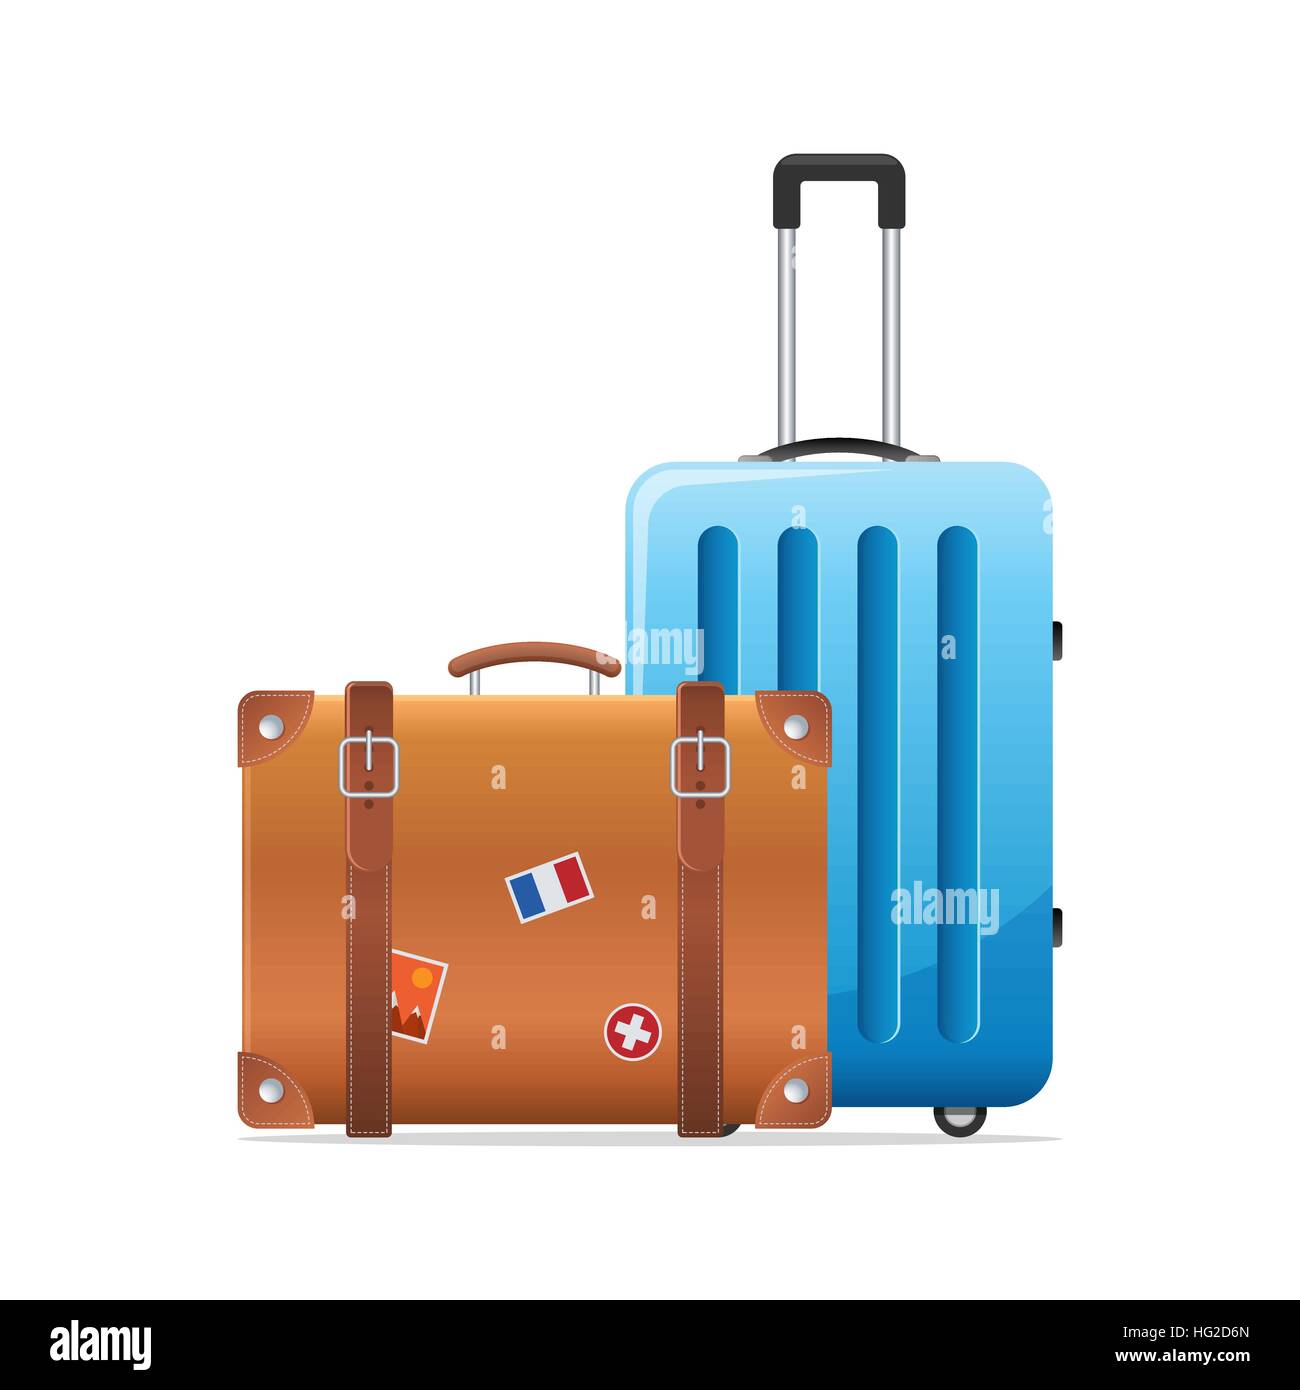 Gepäck-Reise-Koffer-icon Stock-Vektorgrafik - Alamy